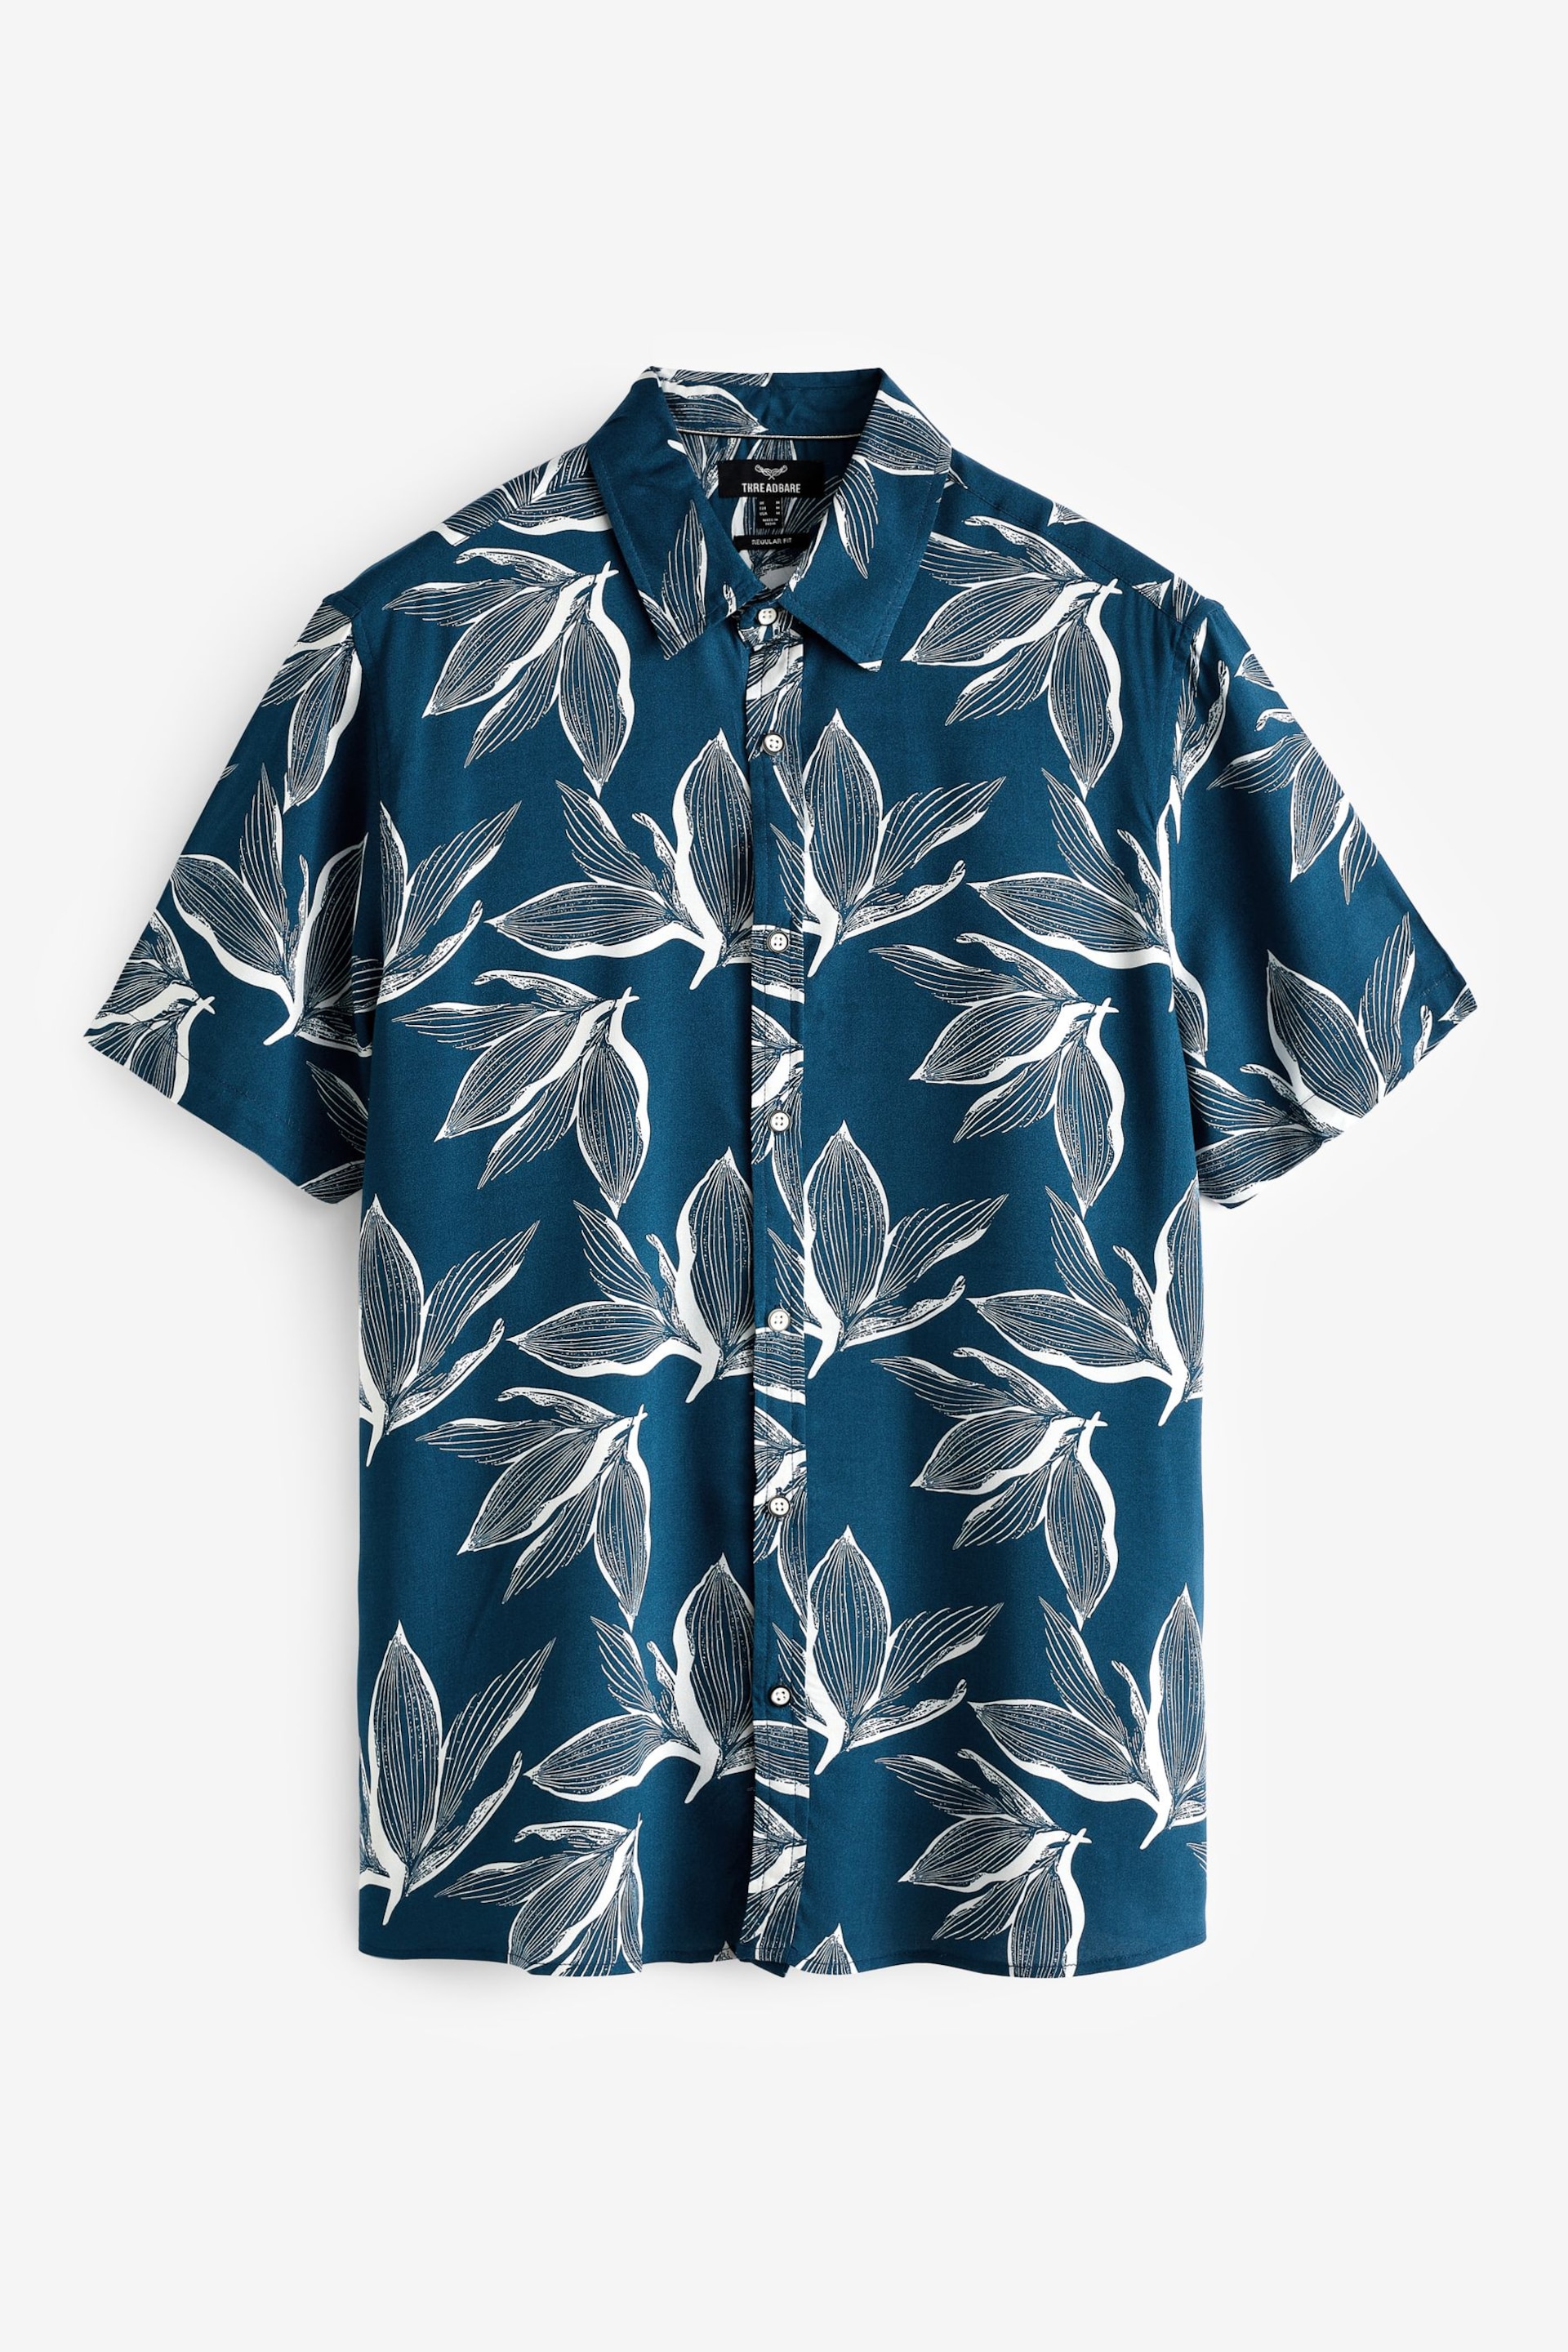 Threadbare Navy Blue Cotton Tropical Print Short Sleeve Shirt - Image 5 of 6